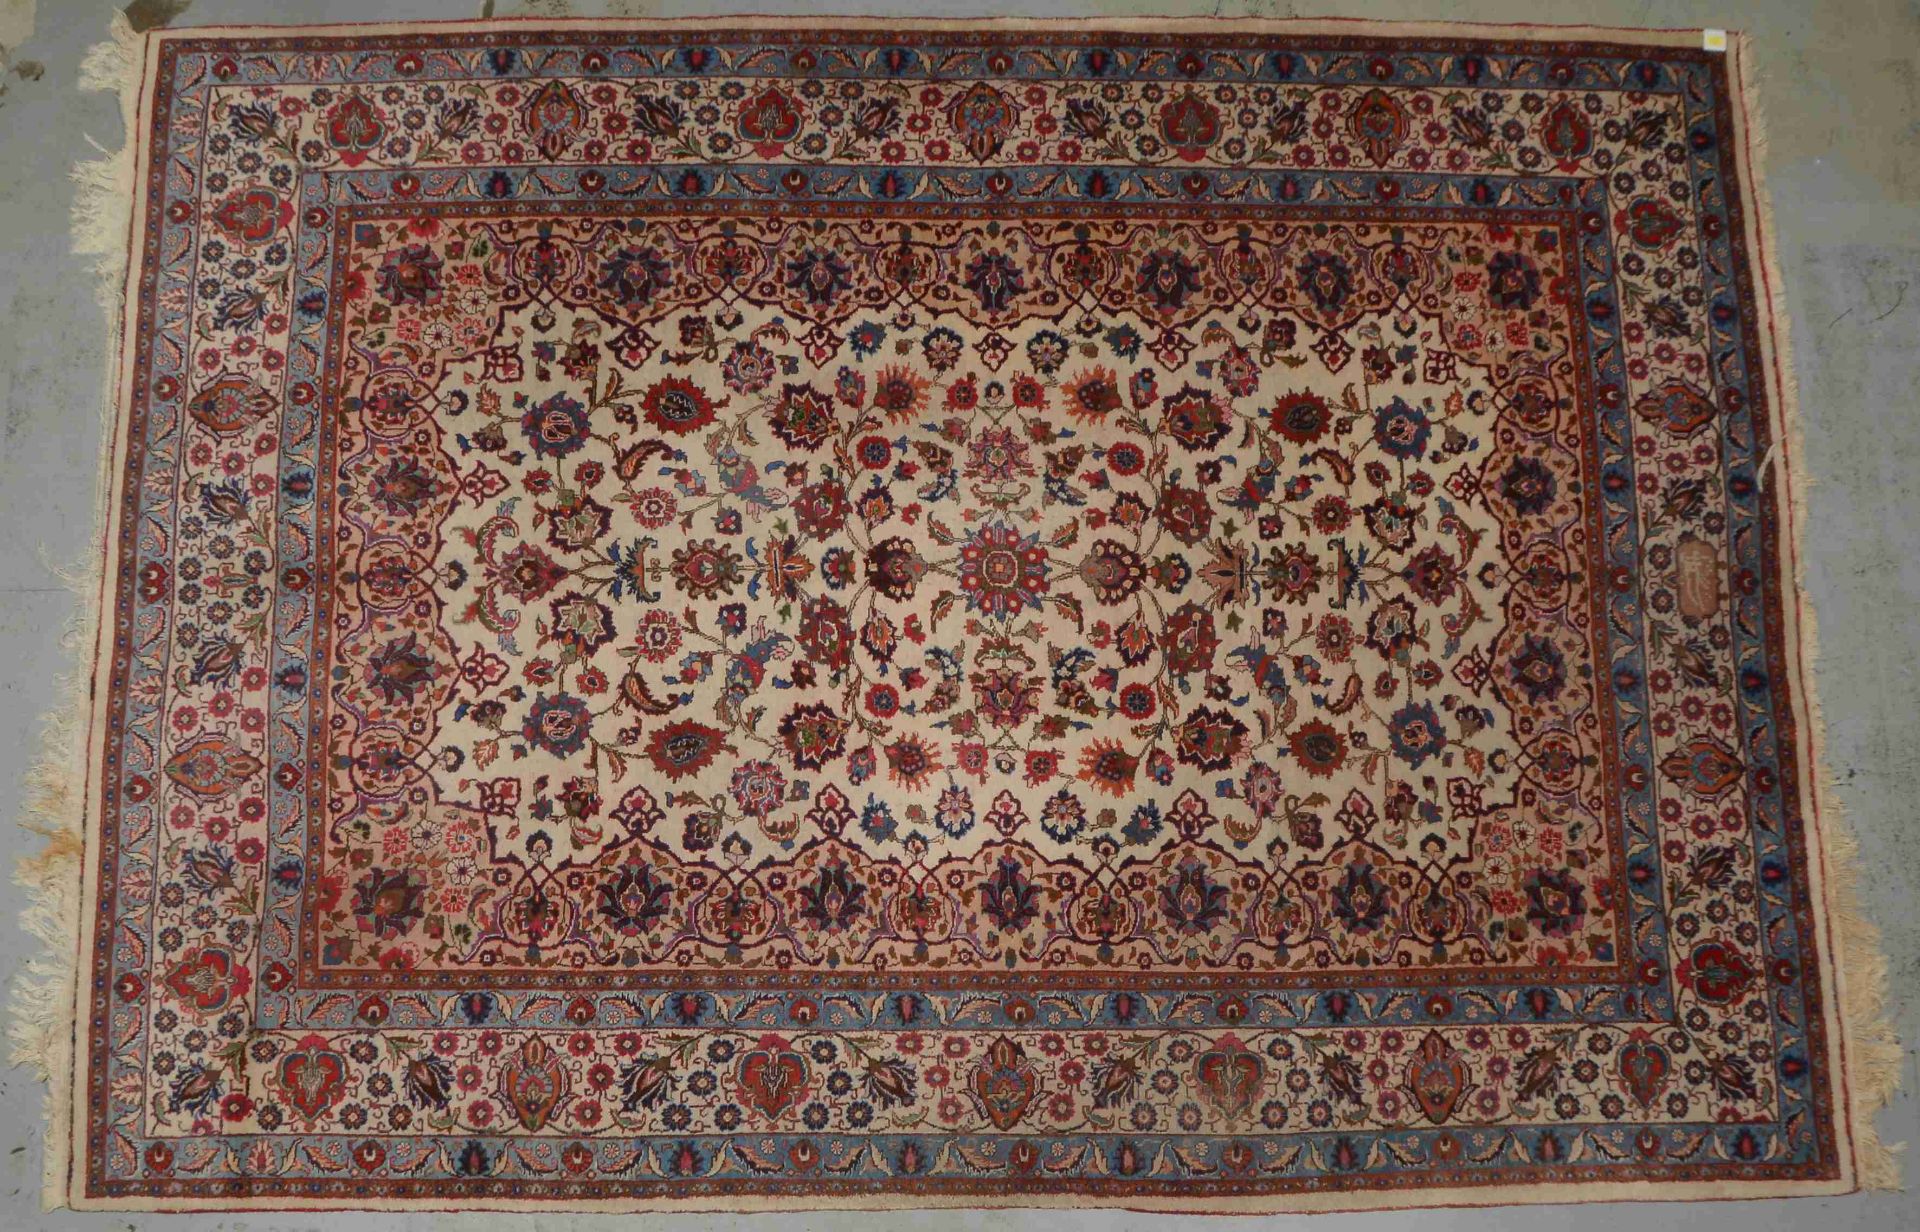 Mesched, älter, feste Knüpfung, hellgrundig, mit bekannter Mesched-Signatur; Maße 362 x 258 cm (stel